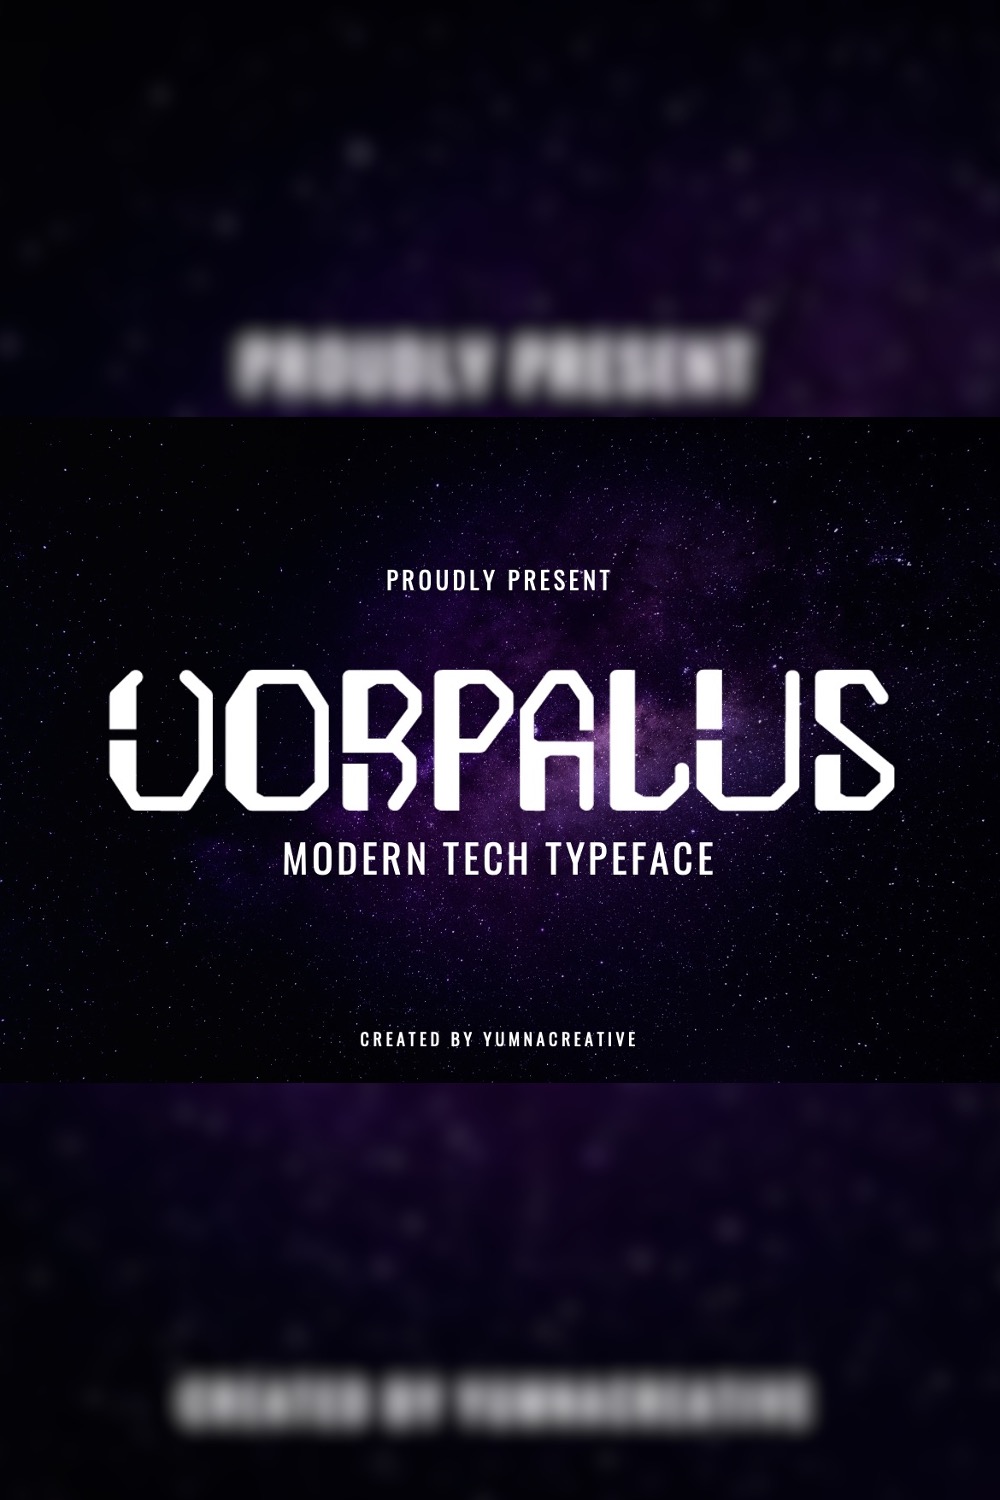 Vorpalus - Modern Tech Font pinterest preview image.